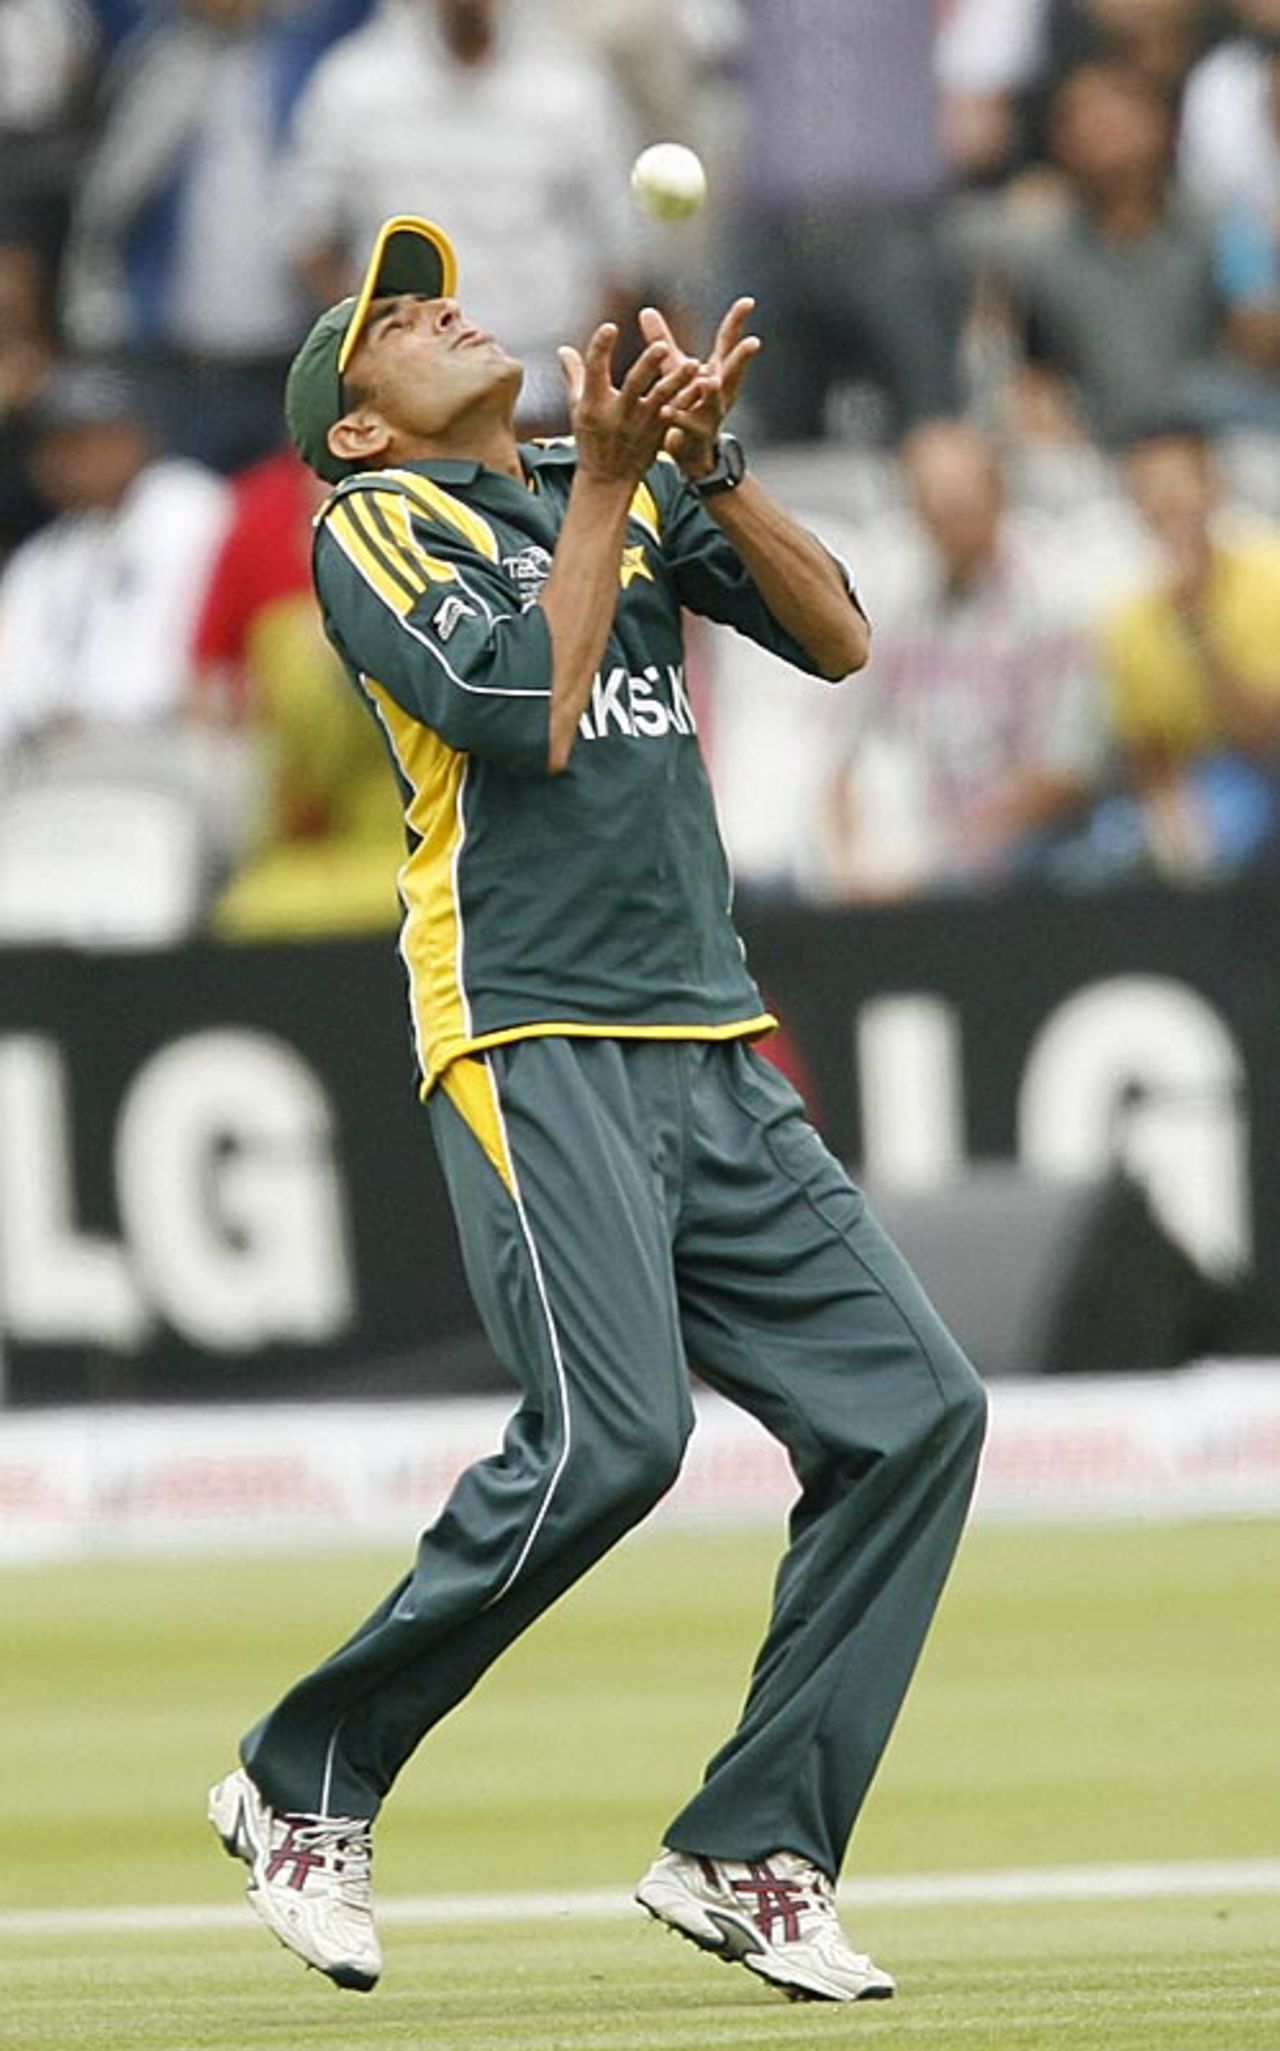 Younis snaps Sanath Jayasuriya, Pakistan v Sri Lanka, ICC World Twenty20 Super Eights, Lord's, June 12, 2009